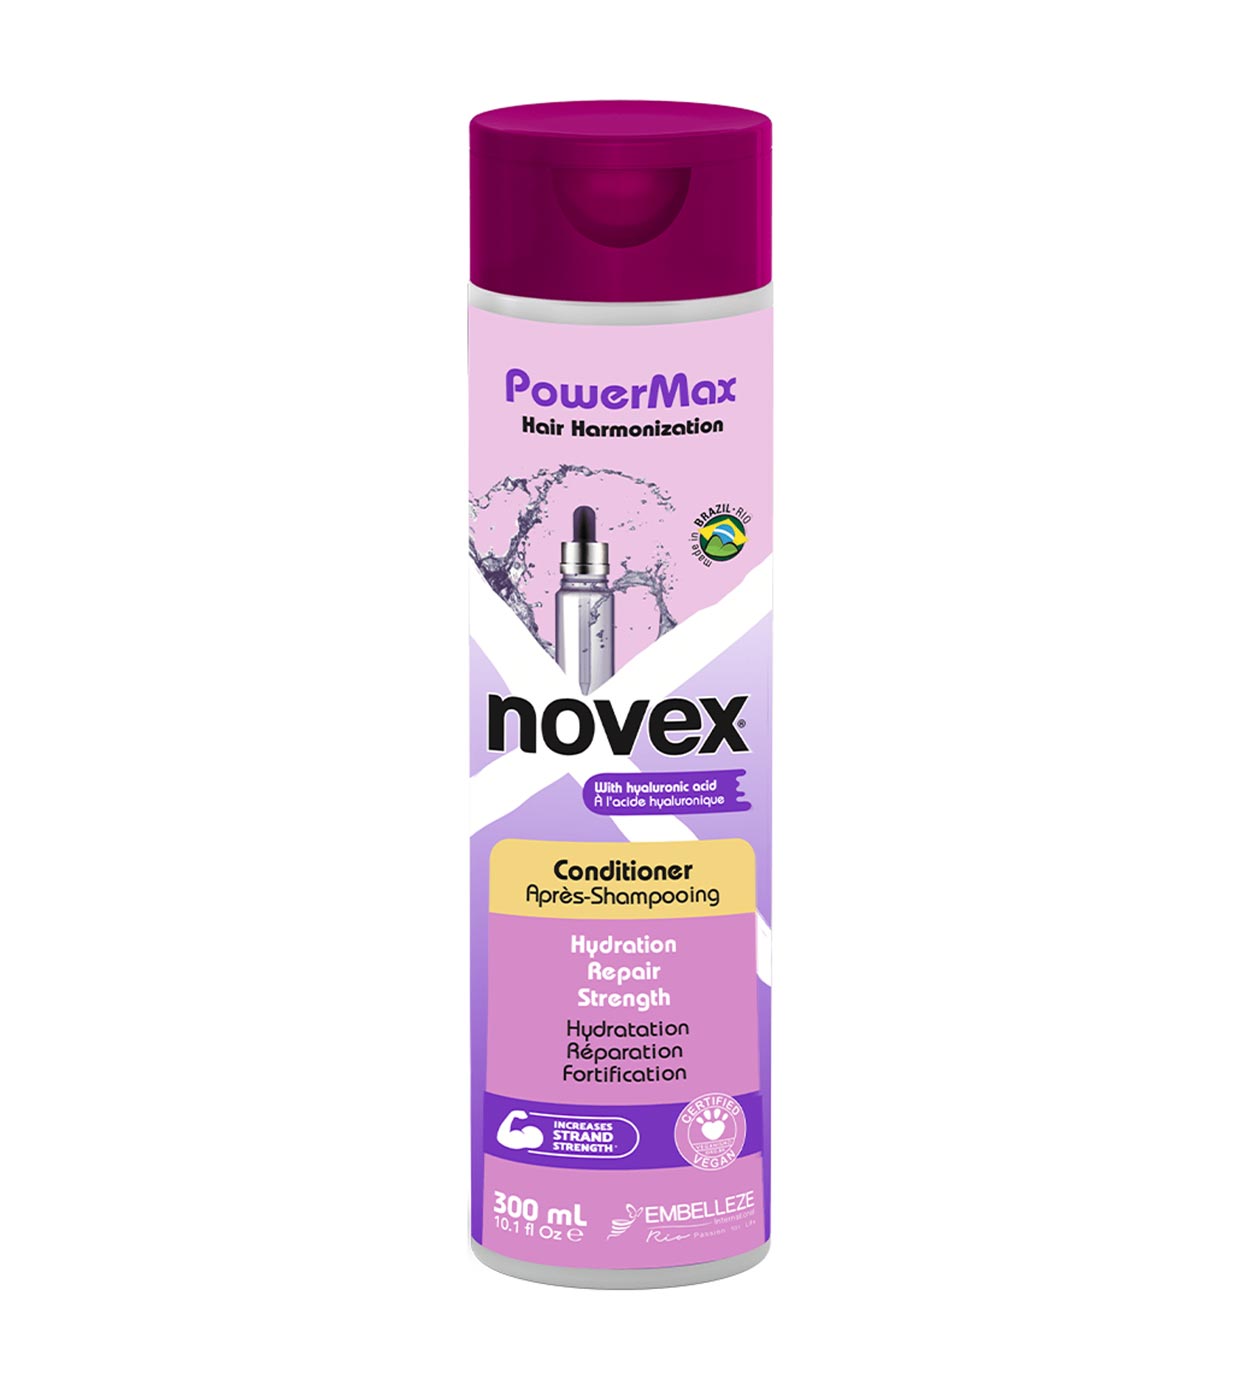 Novex - PowerMax Hair Harmonization Conditioner 300ml